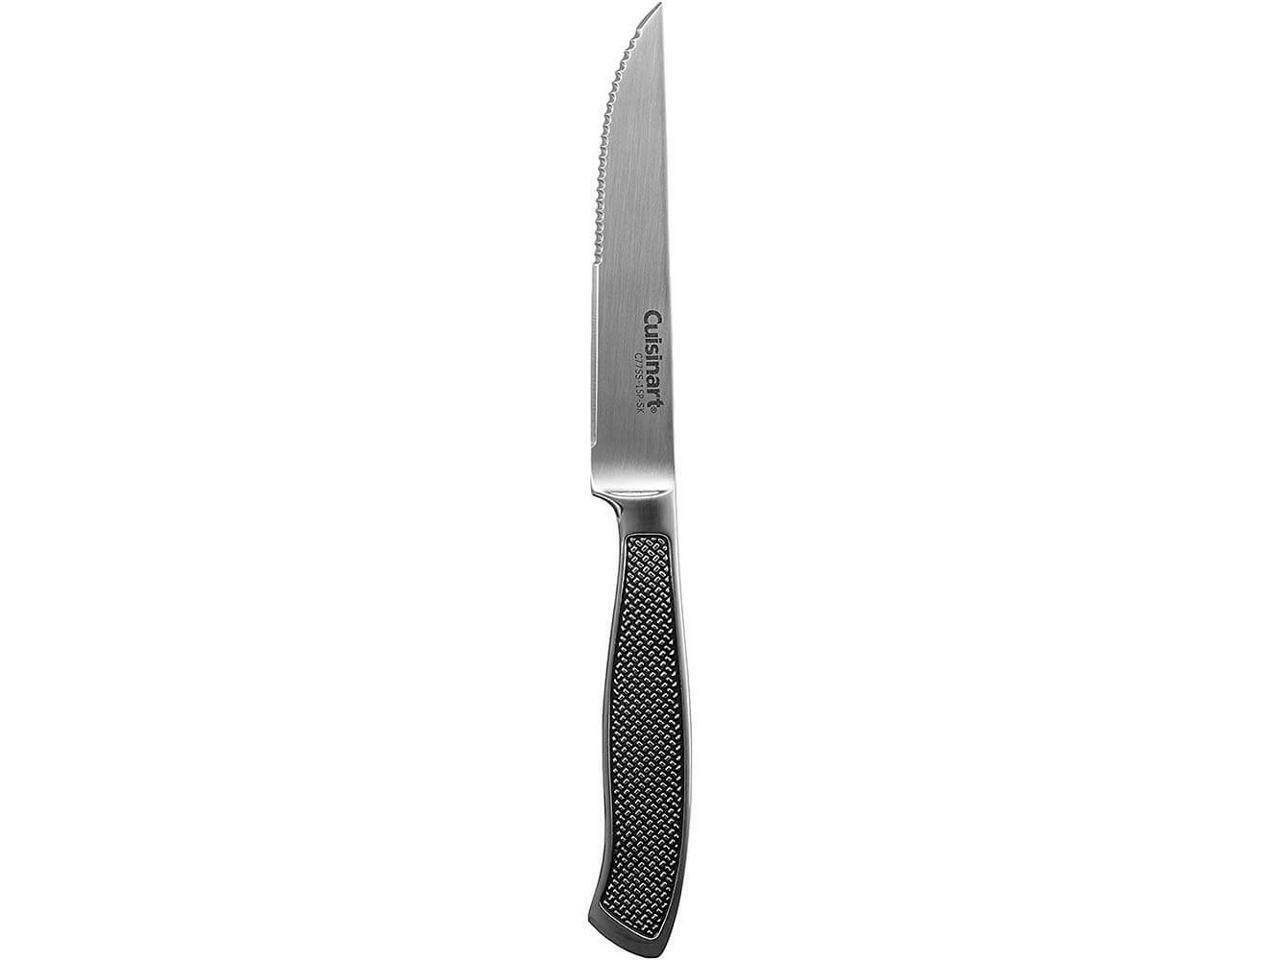 Cuisinart Graphix 15-Piece Stainless Steel Cutlery Knife Block Set